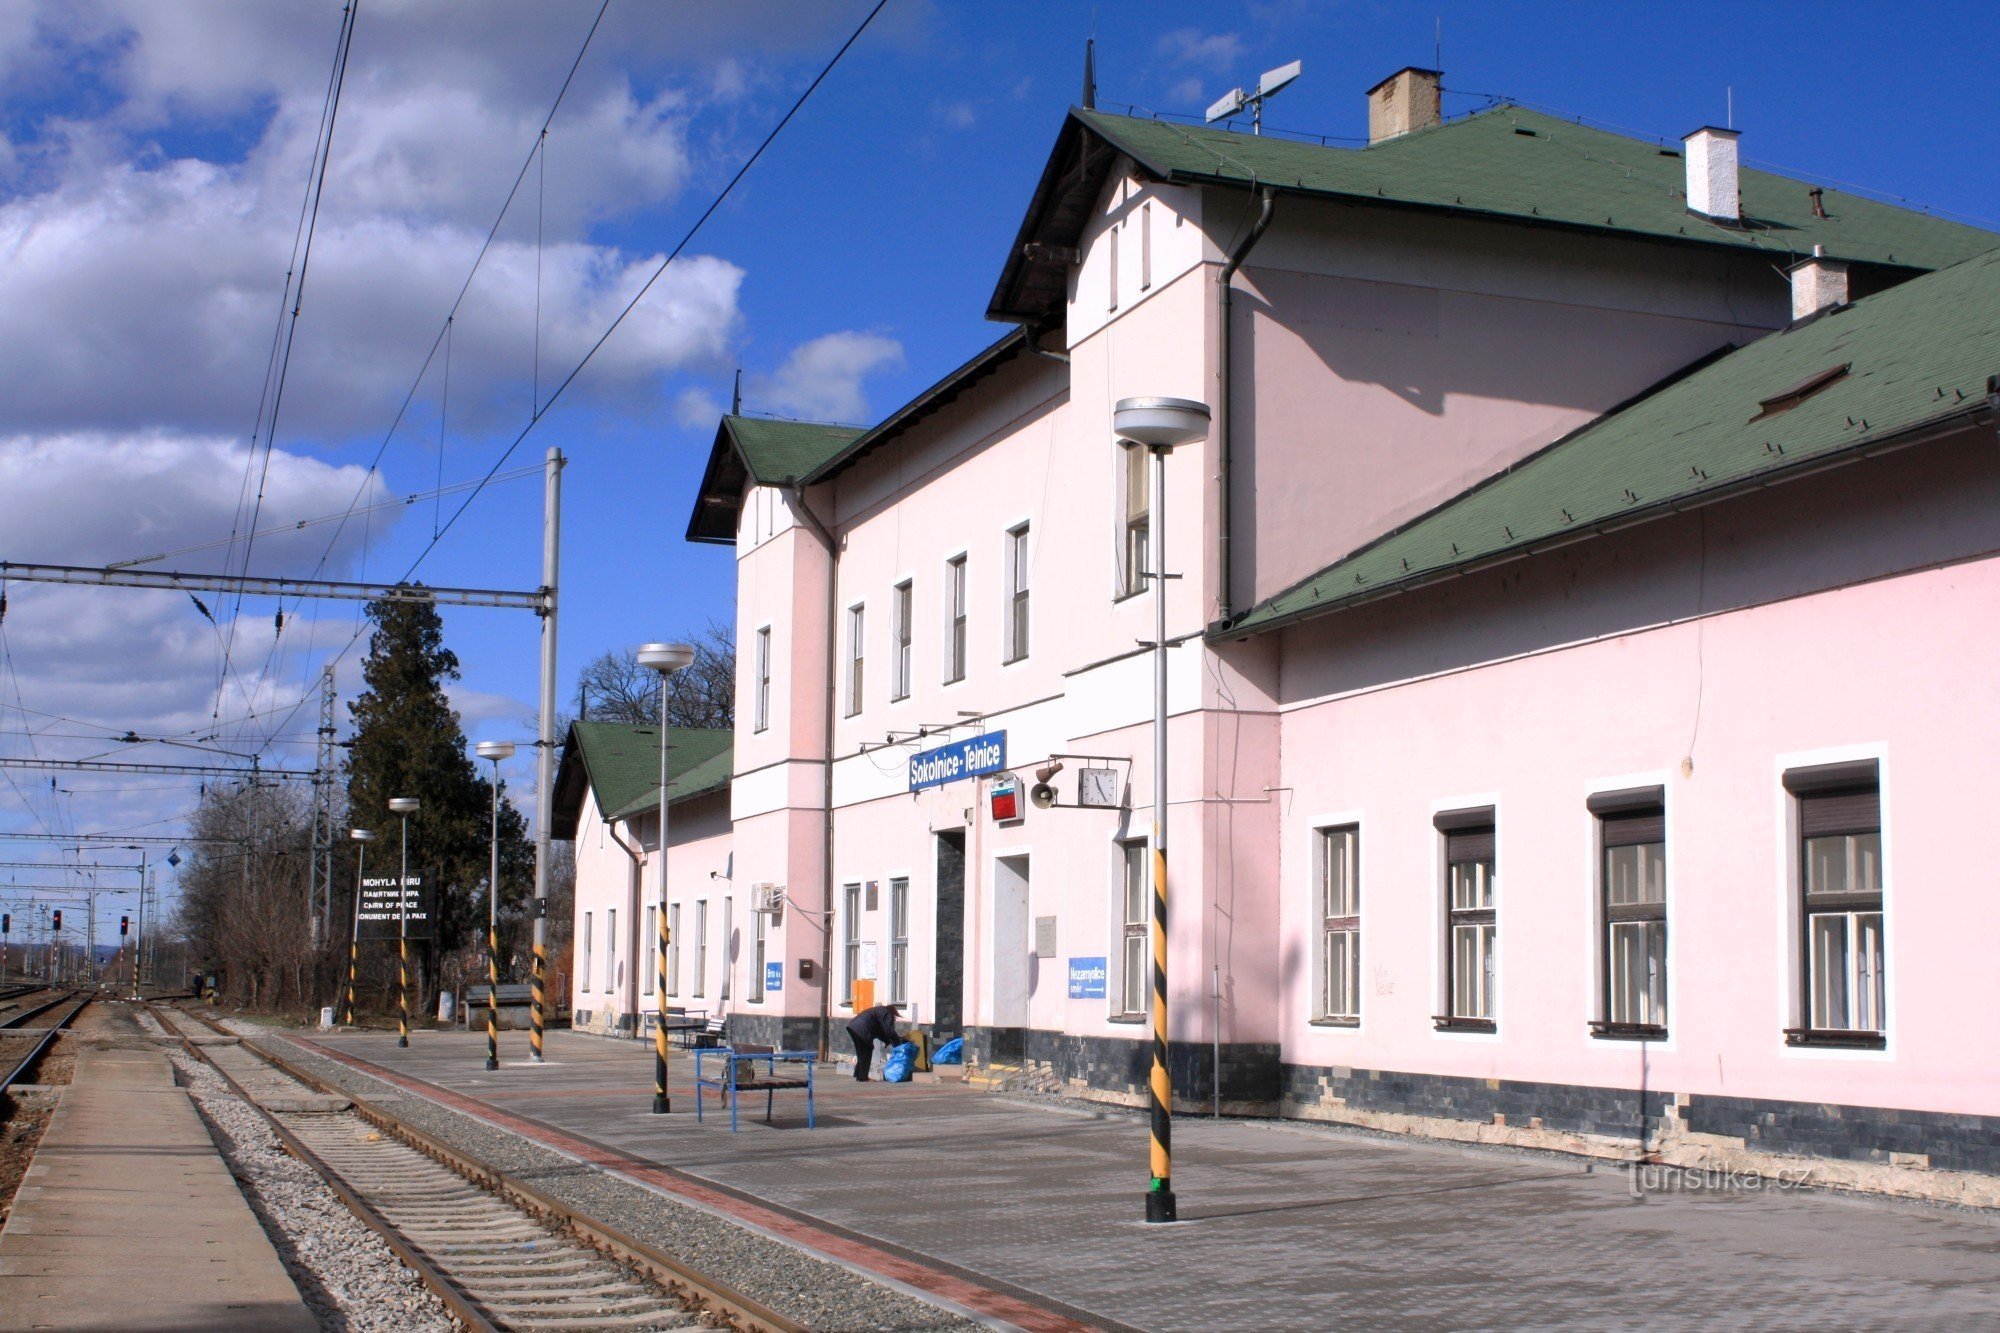 Sokolnice-Telnice - railway station